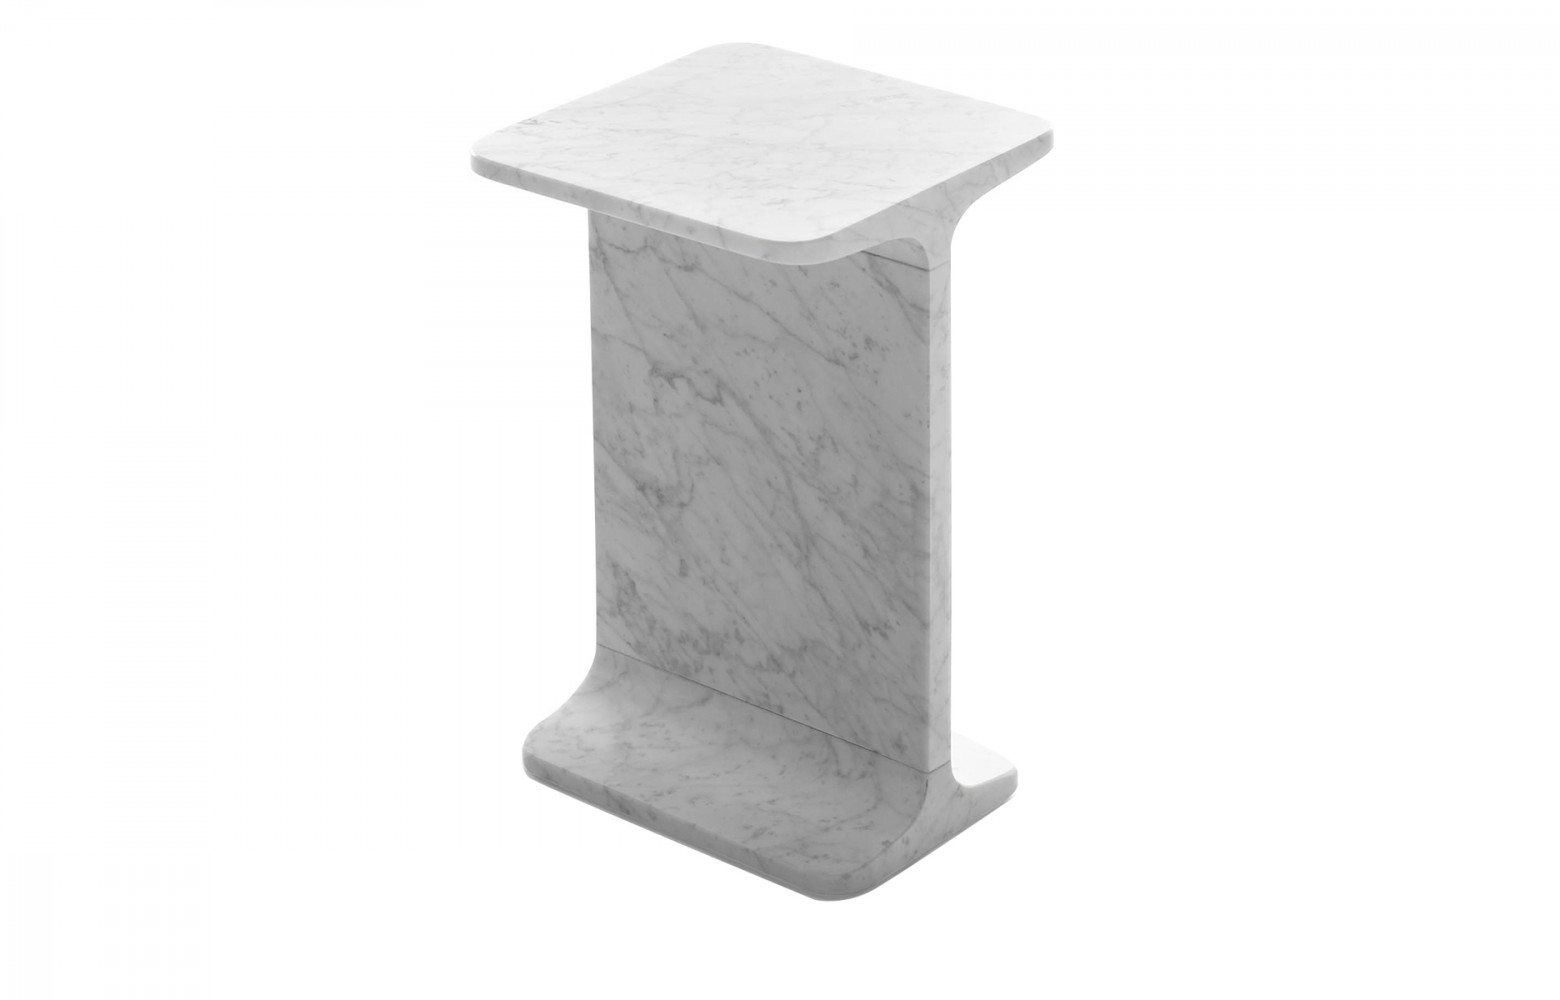 Table d’appoint Side Table en marbre et acrylique coulé, 3 500 €. Objects of Common Interest.